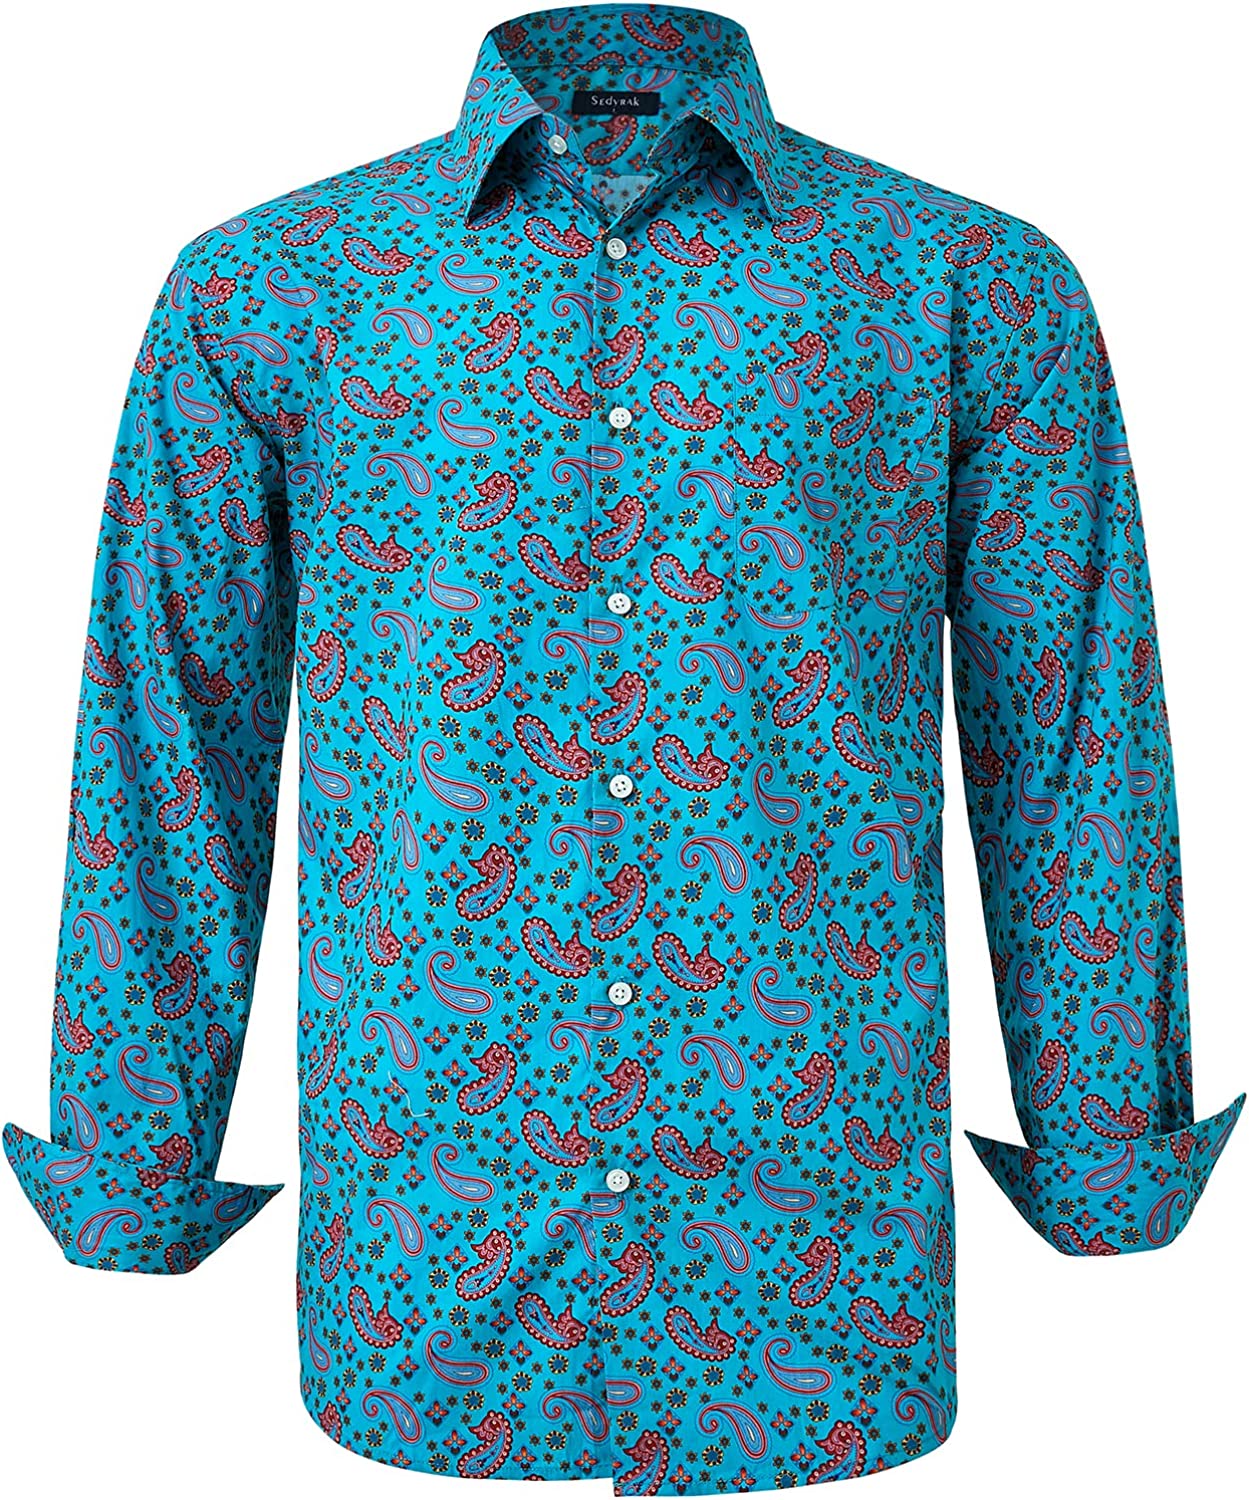  Paisley Shirts for Men Regular Fit Button Down Shirts